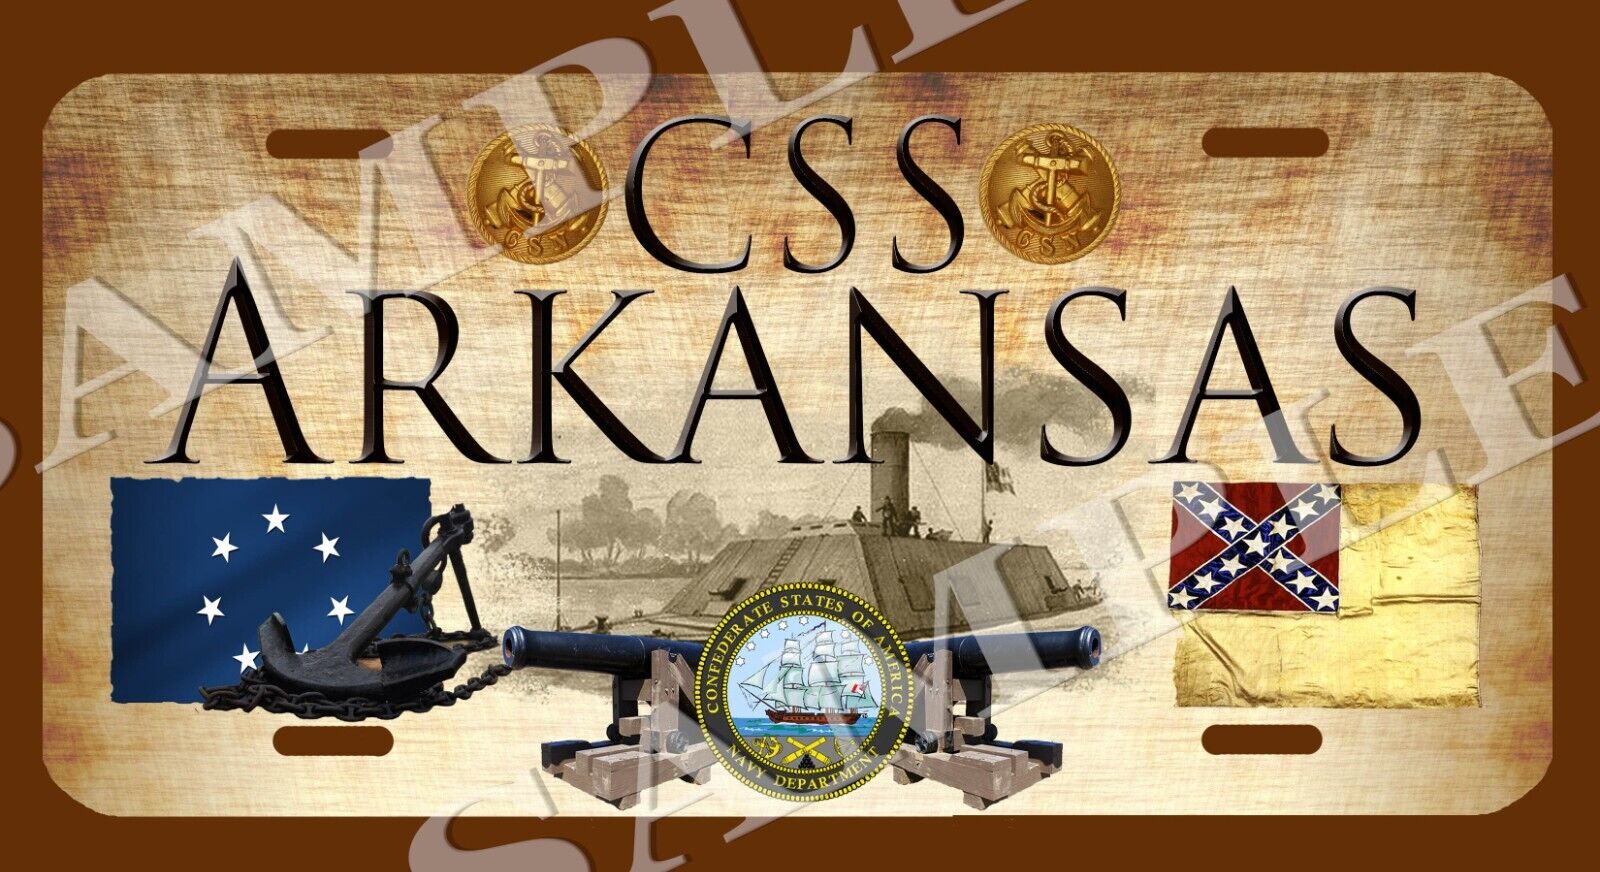 CSS Arkansas Confederate Naval American Civil War Themed vehicle license plate